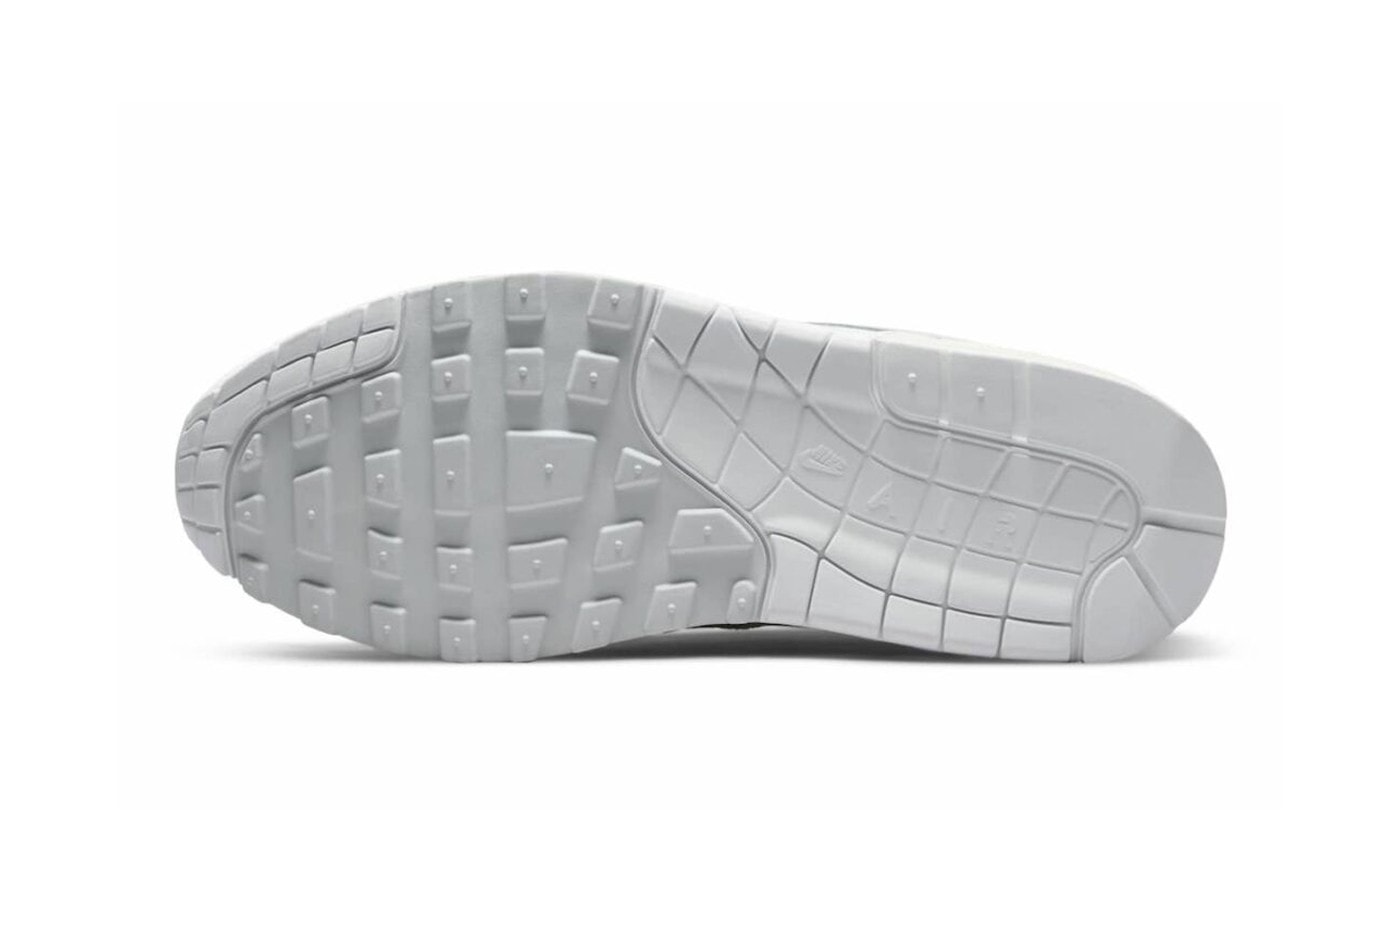 Patta x Nike Air Max 1 最新联名配色「White」发售日期正式确立